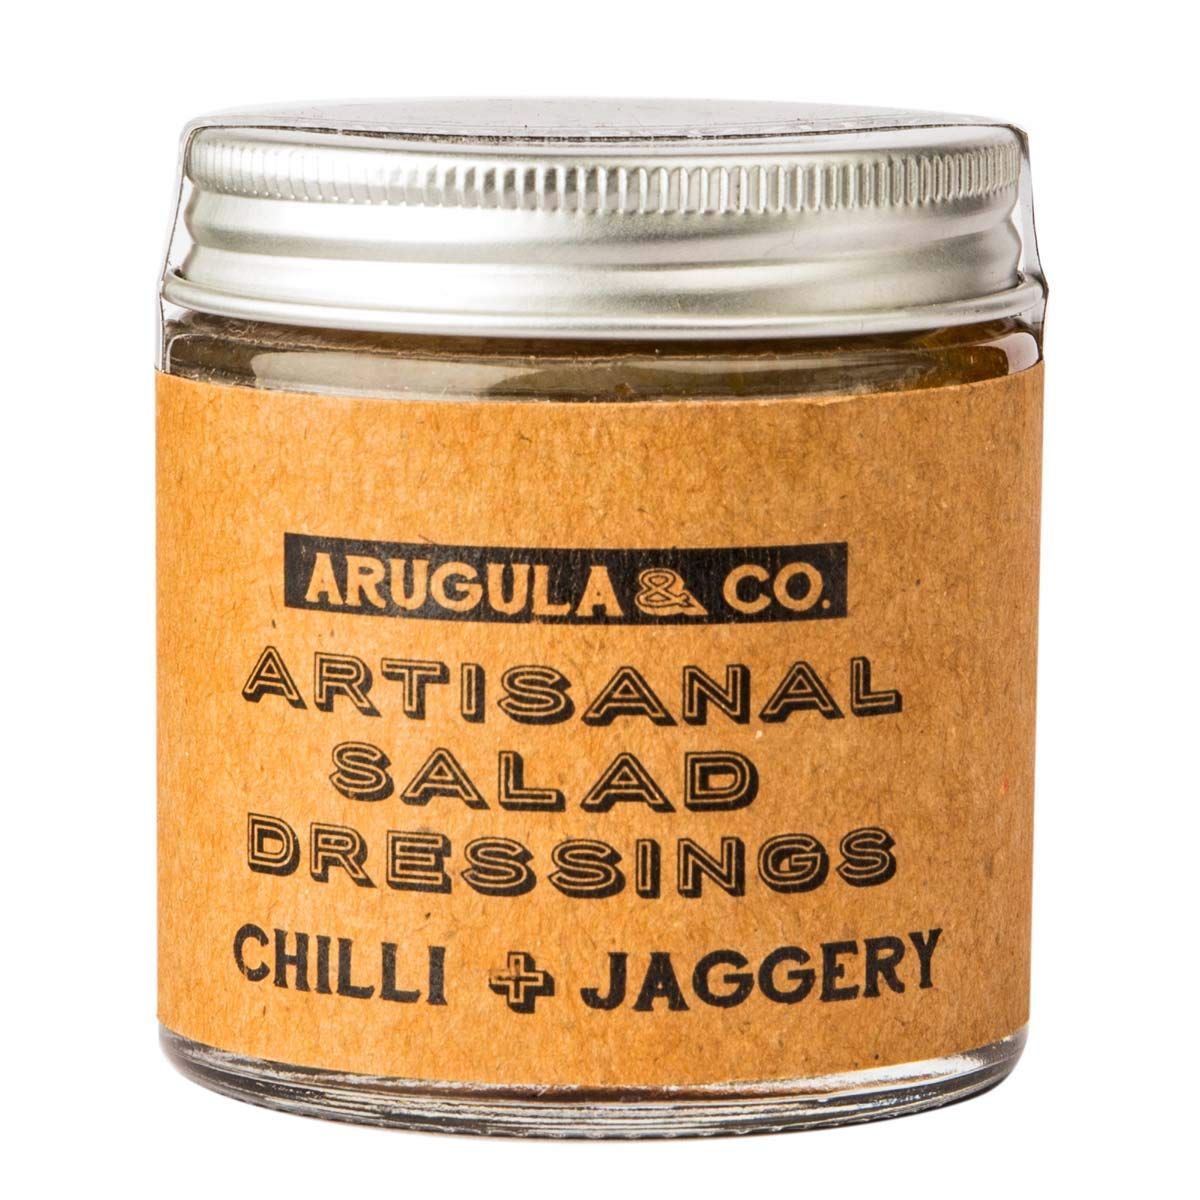 Arugula & Co. Chilli Jaggery Salad Dressing Image